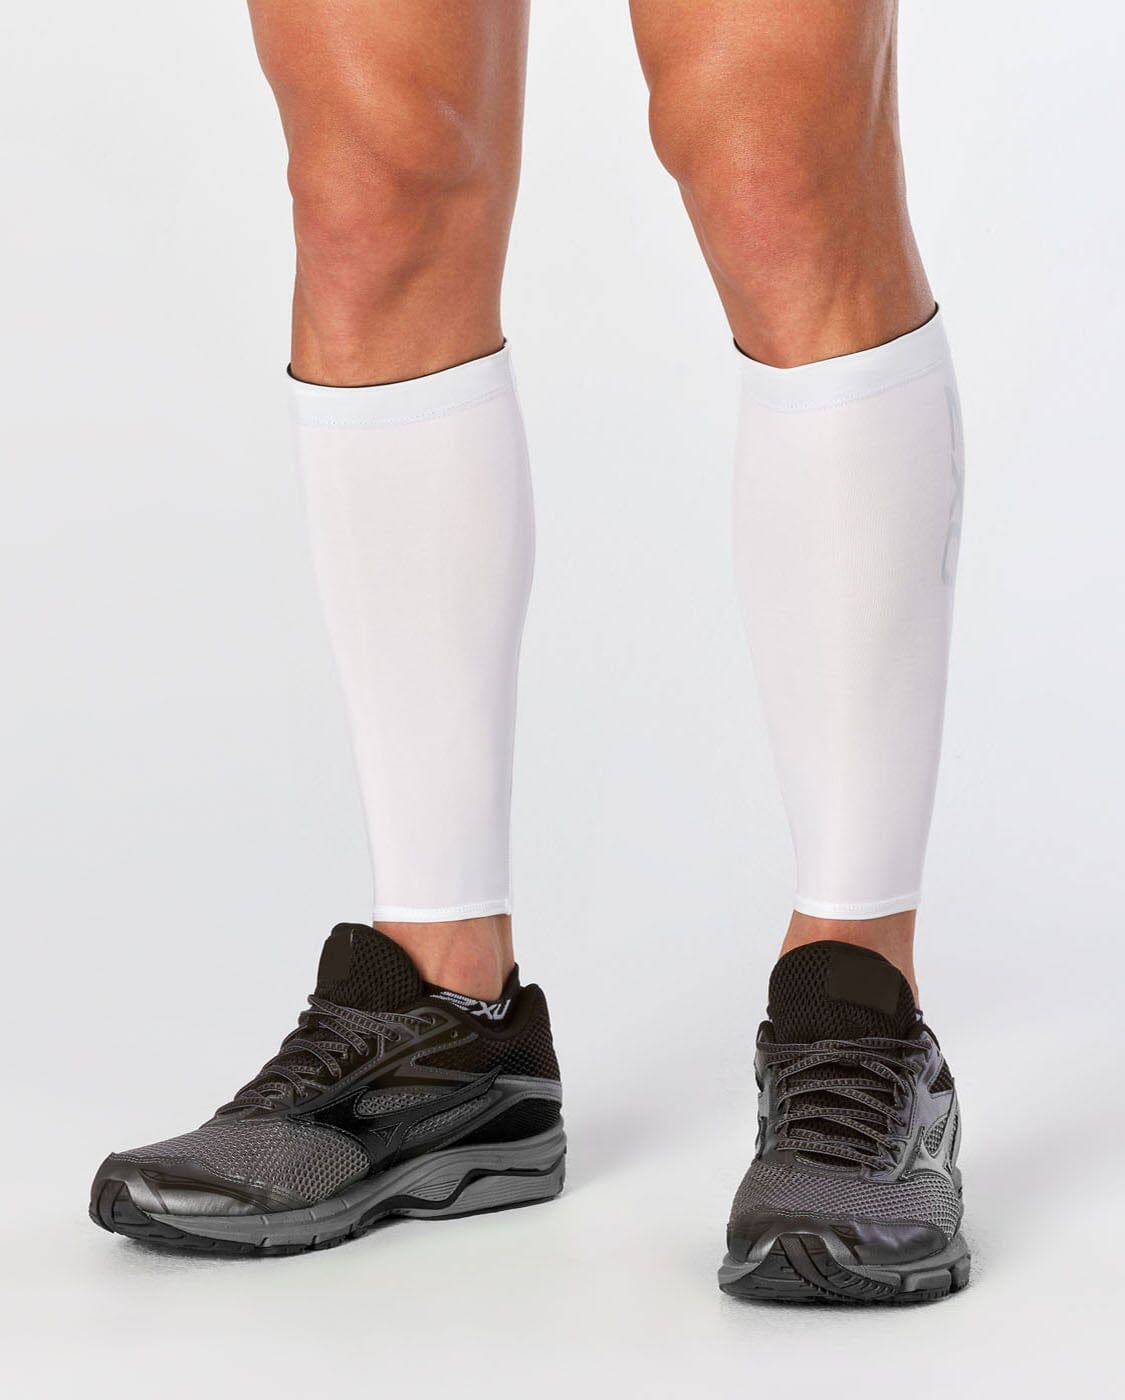 Compression Leg Sleeve Calf Sleeve for Men and Women, Calf Guard